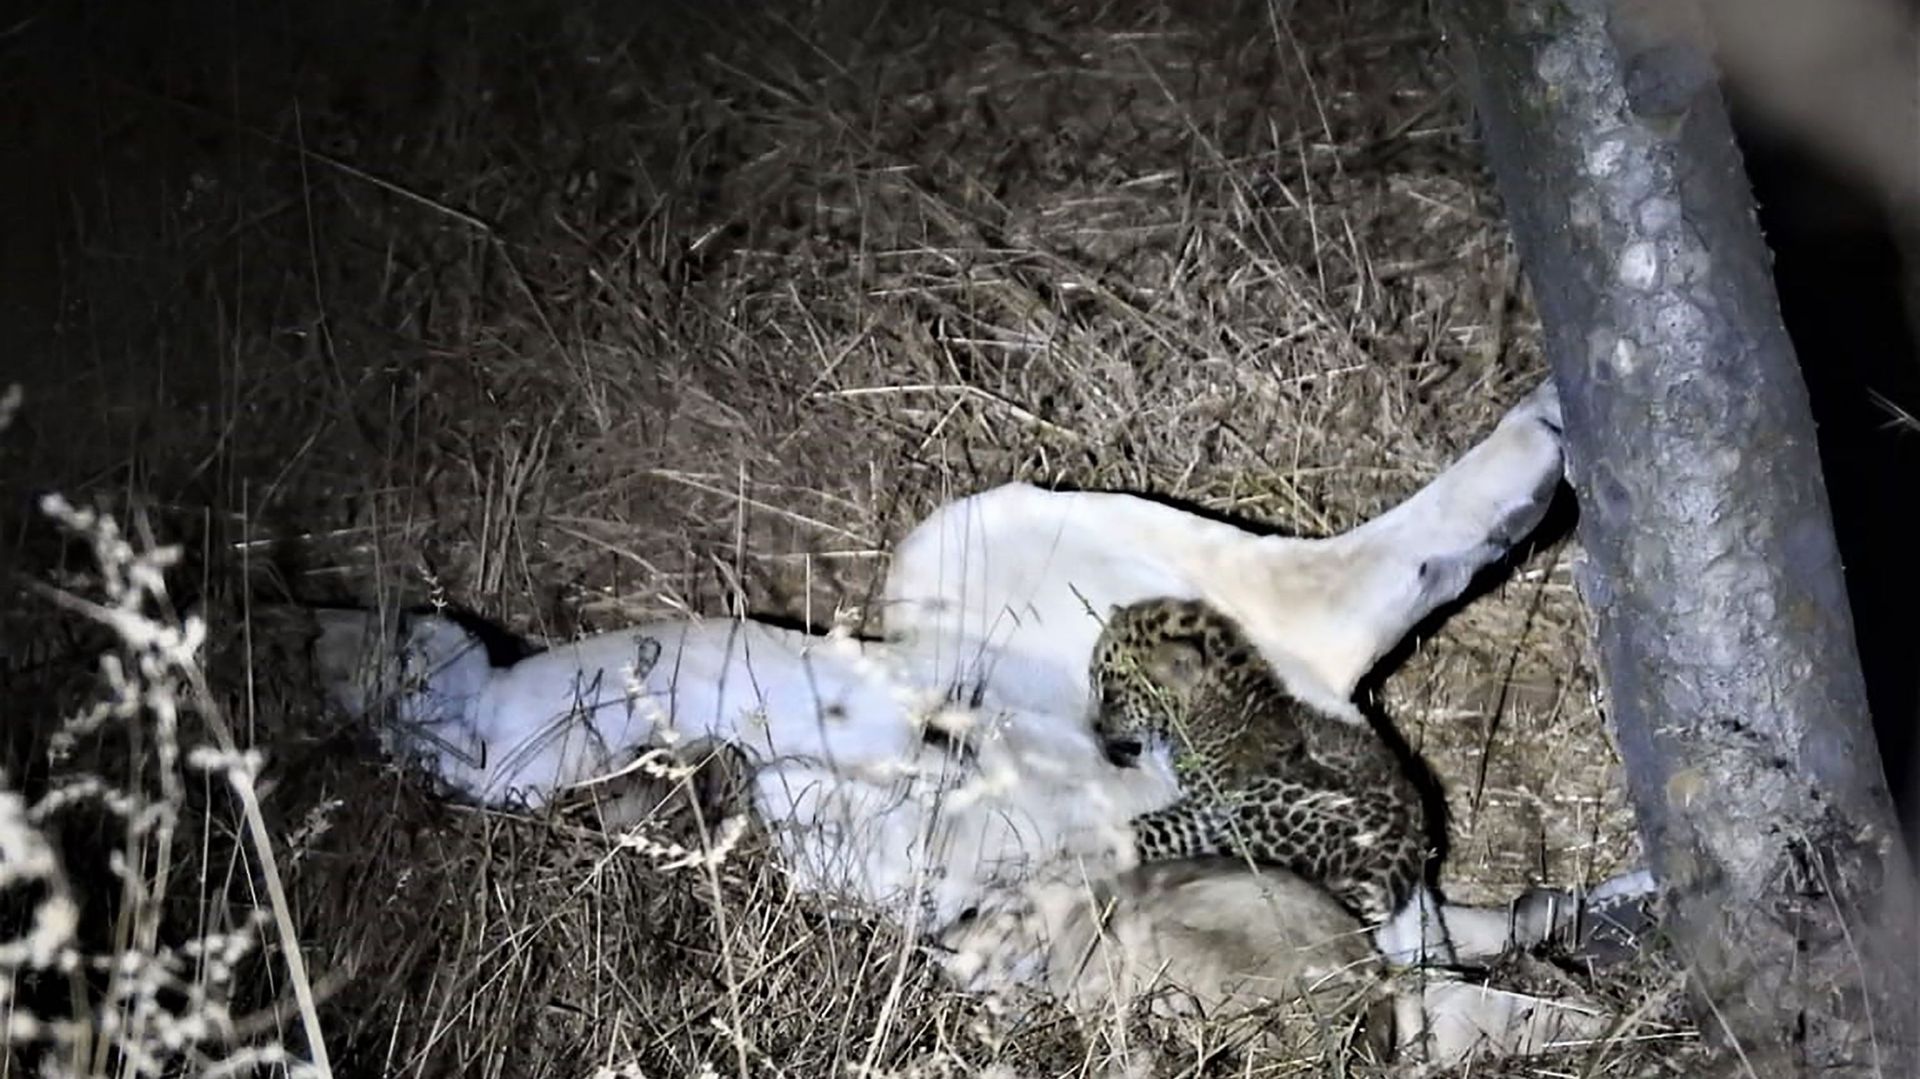 Le bébé léopard et sa maman adoptive